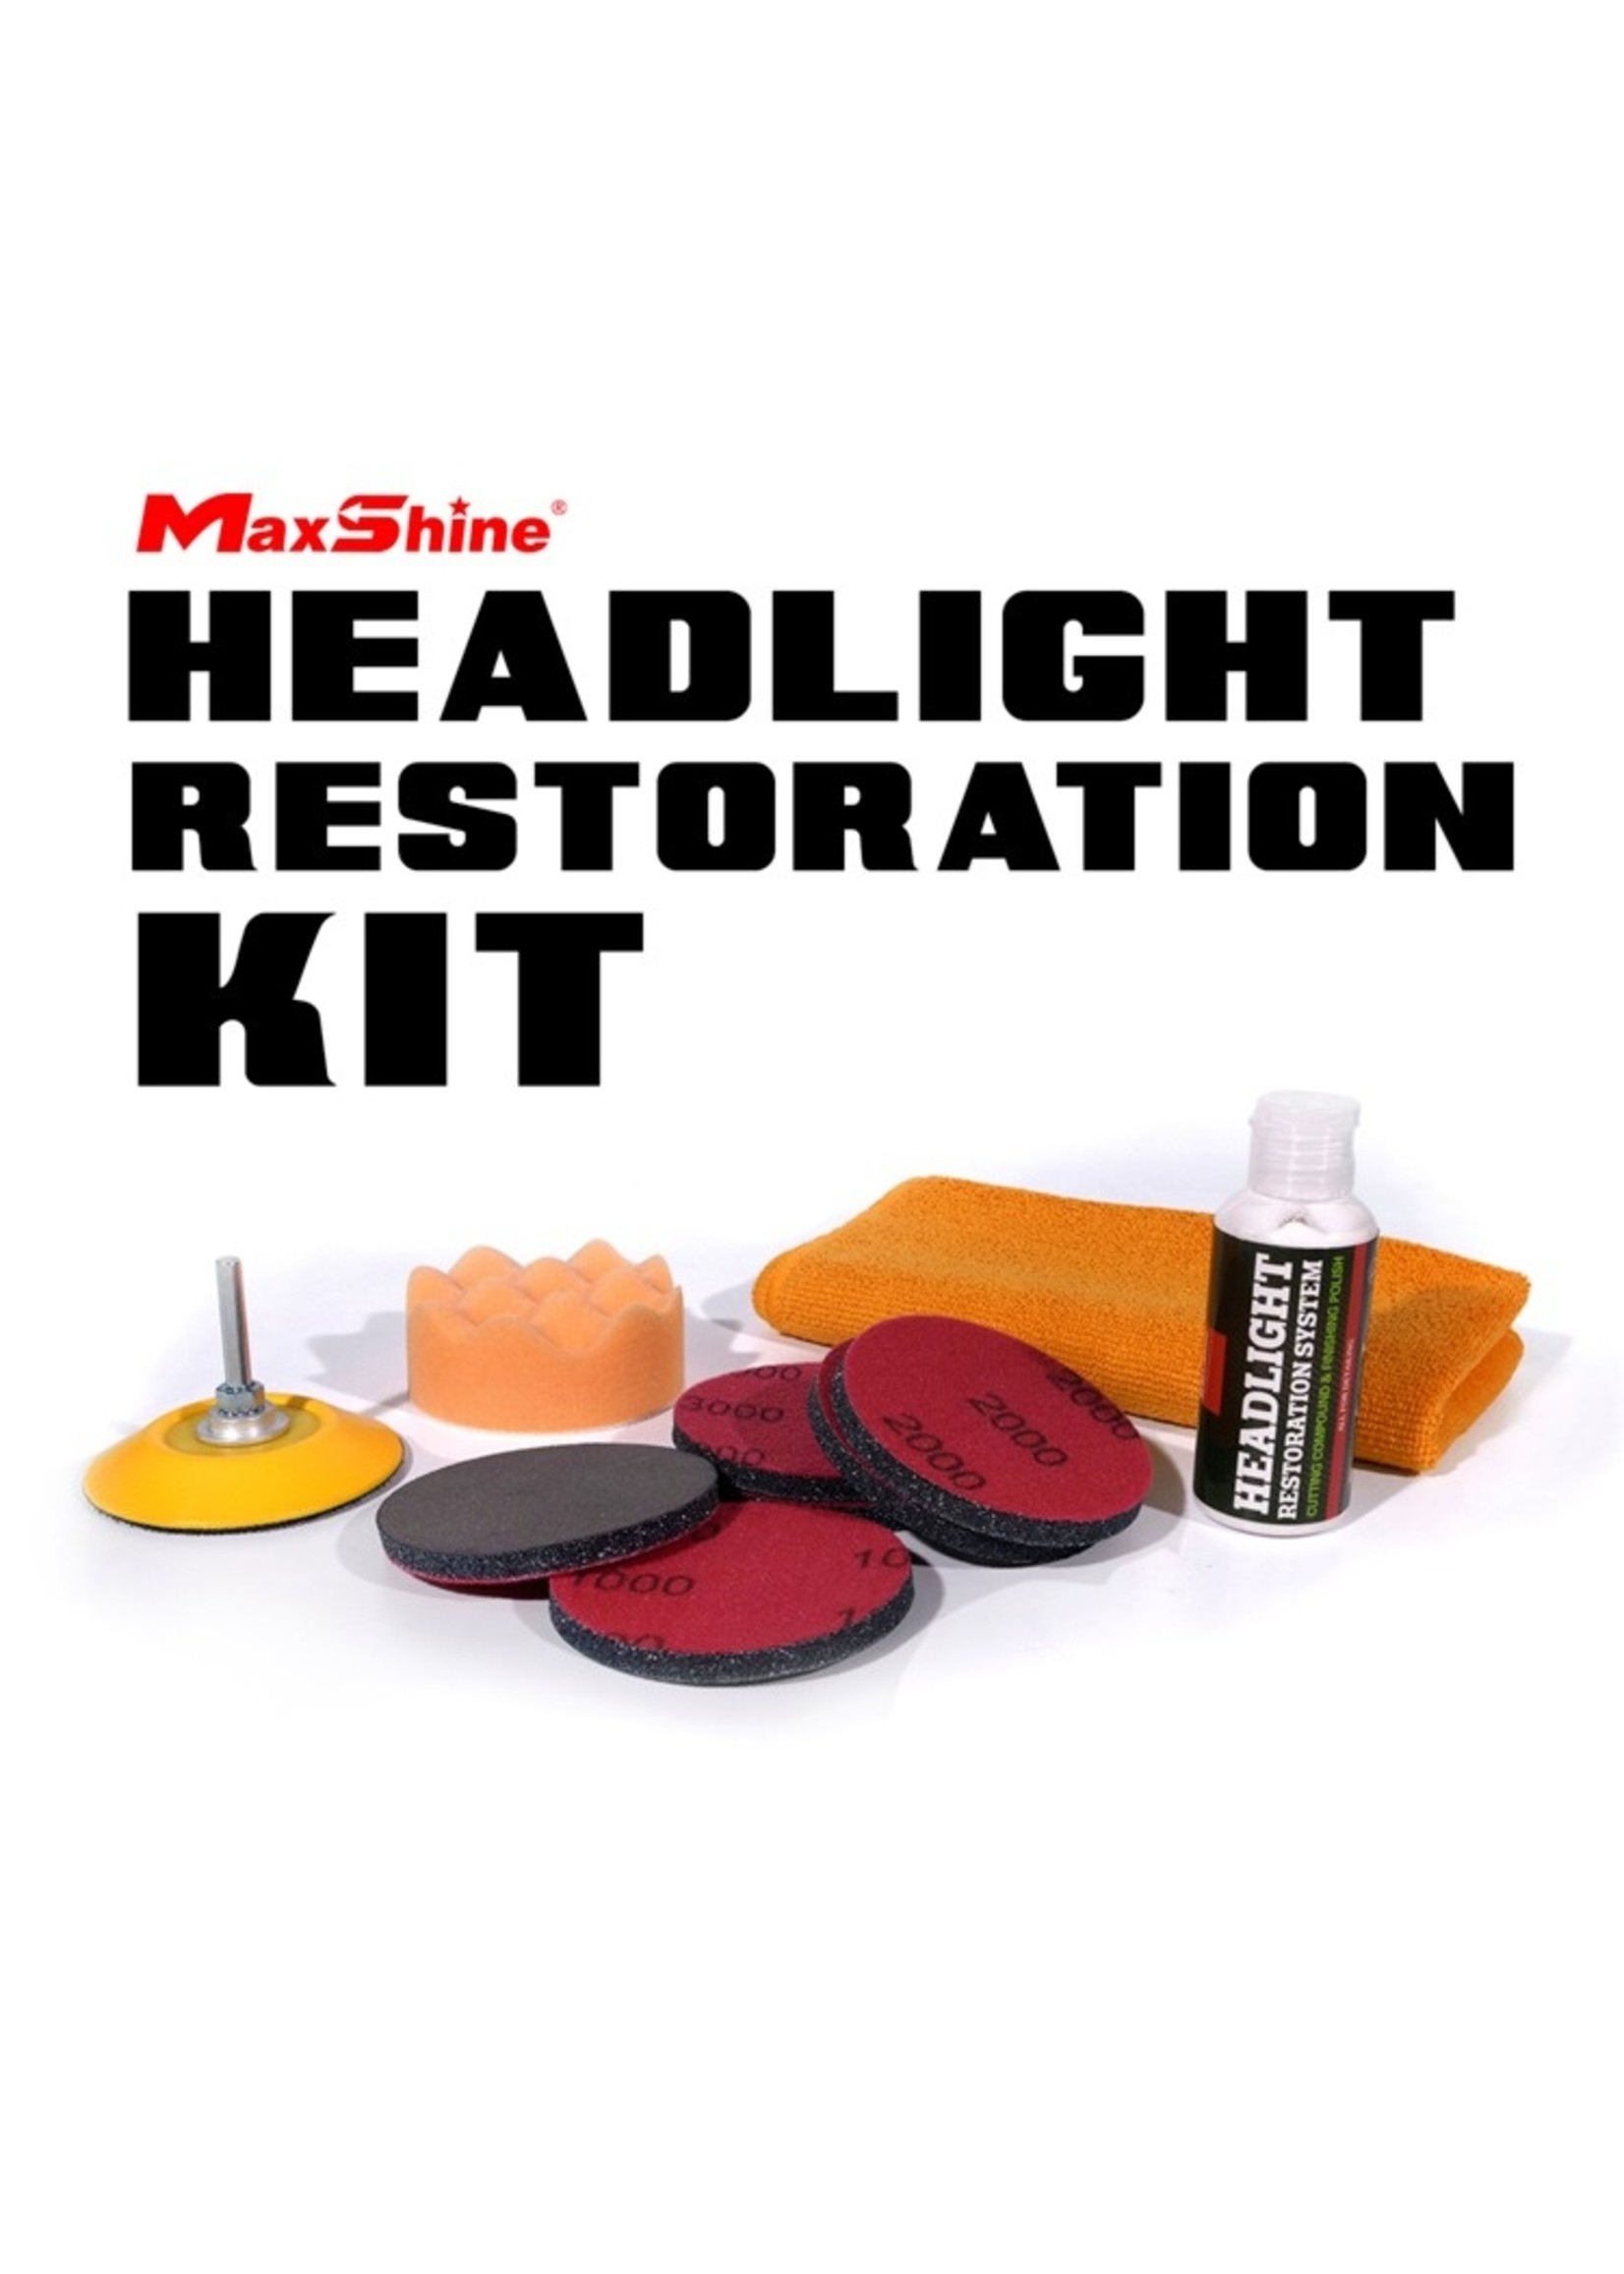 MaxShine Headlight Restoration Kit